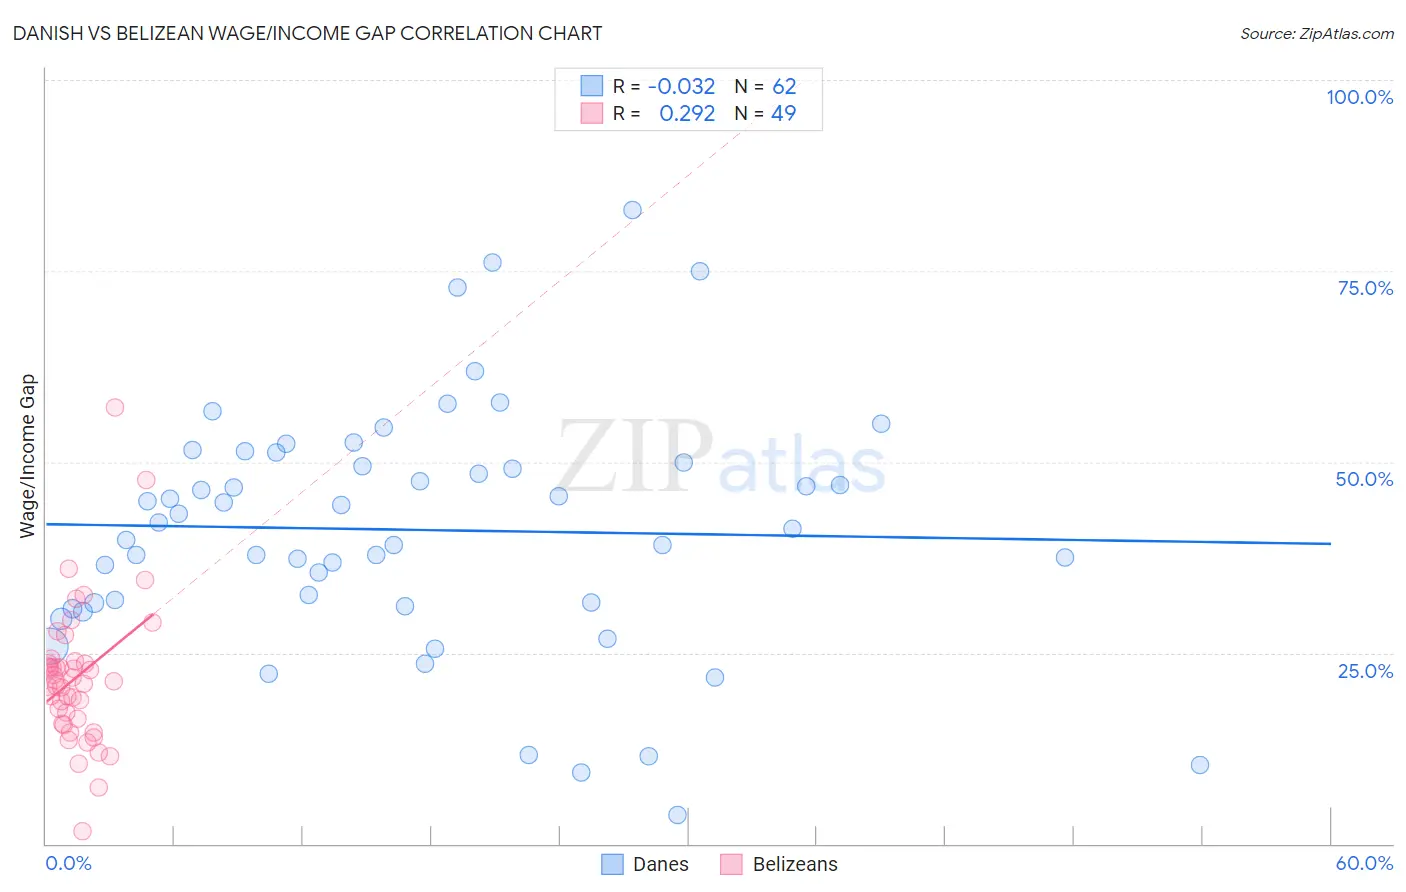 Danish vs Belizean Wage/Income Gap